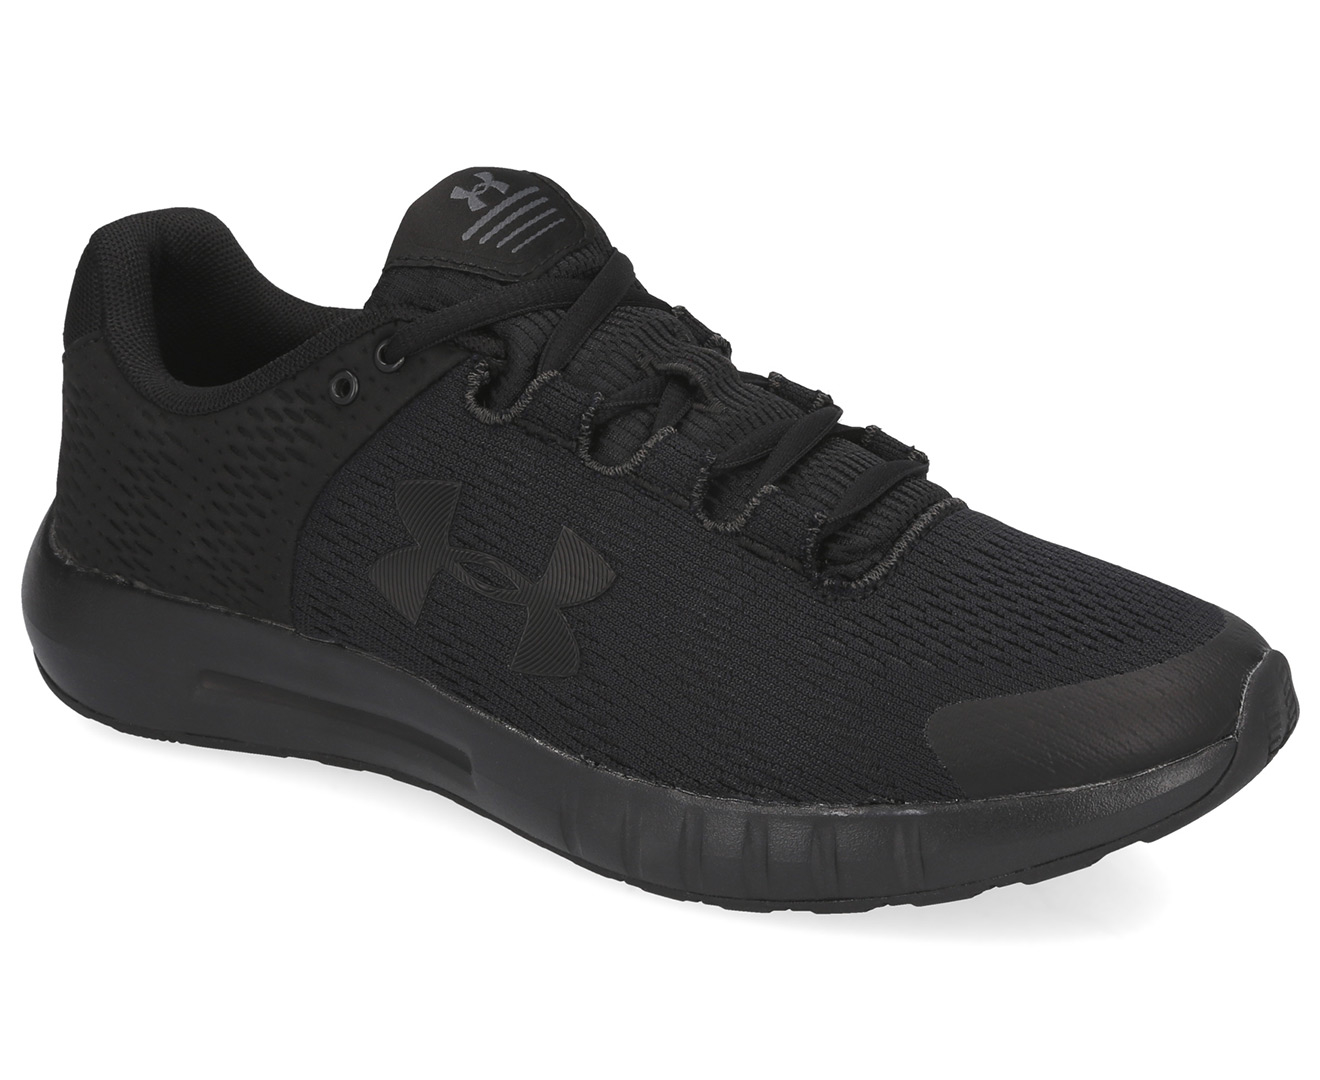 Under Armour Women's Micro G Pursuit Running Shoes - Black | Catch.co.nz